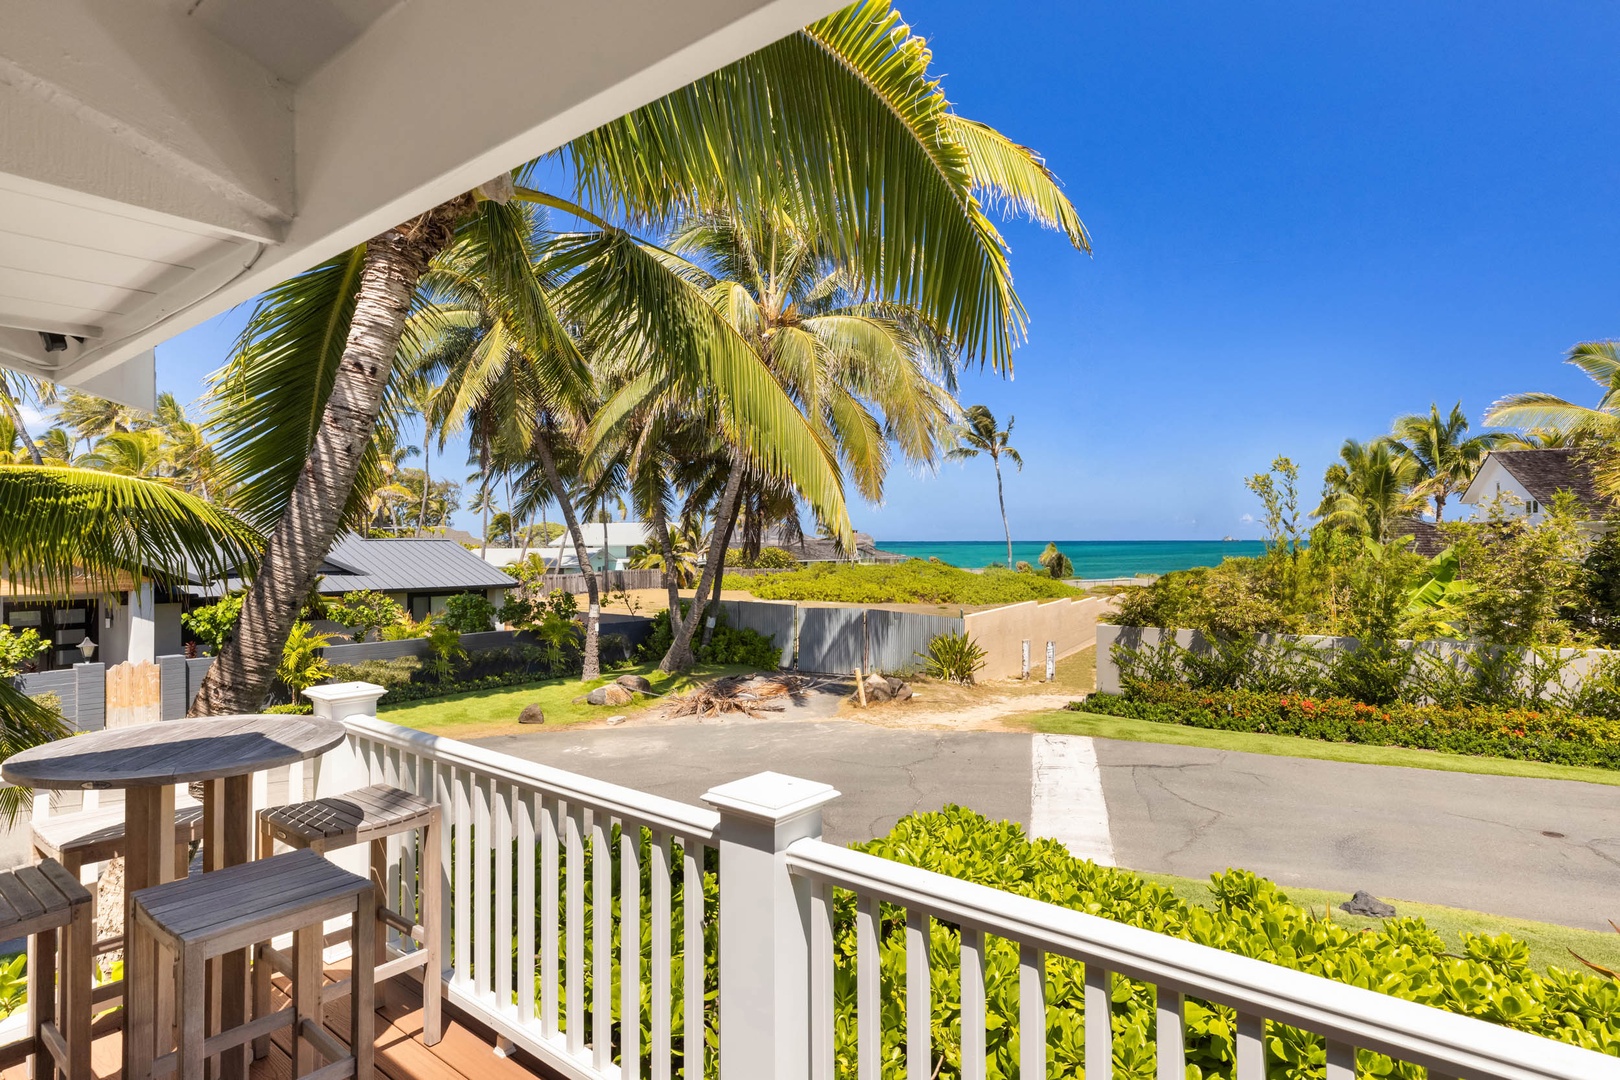 Kailua Vacation Rentals, Seahorse Beach House - Embrace panoramic views on the wrap-around deck